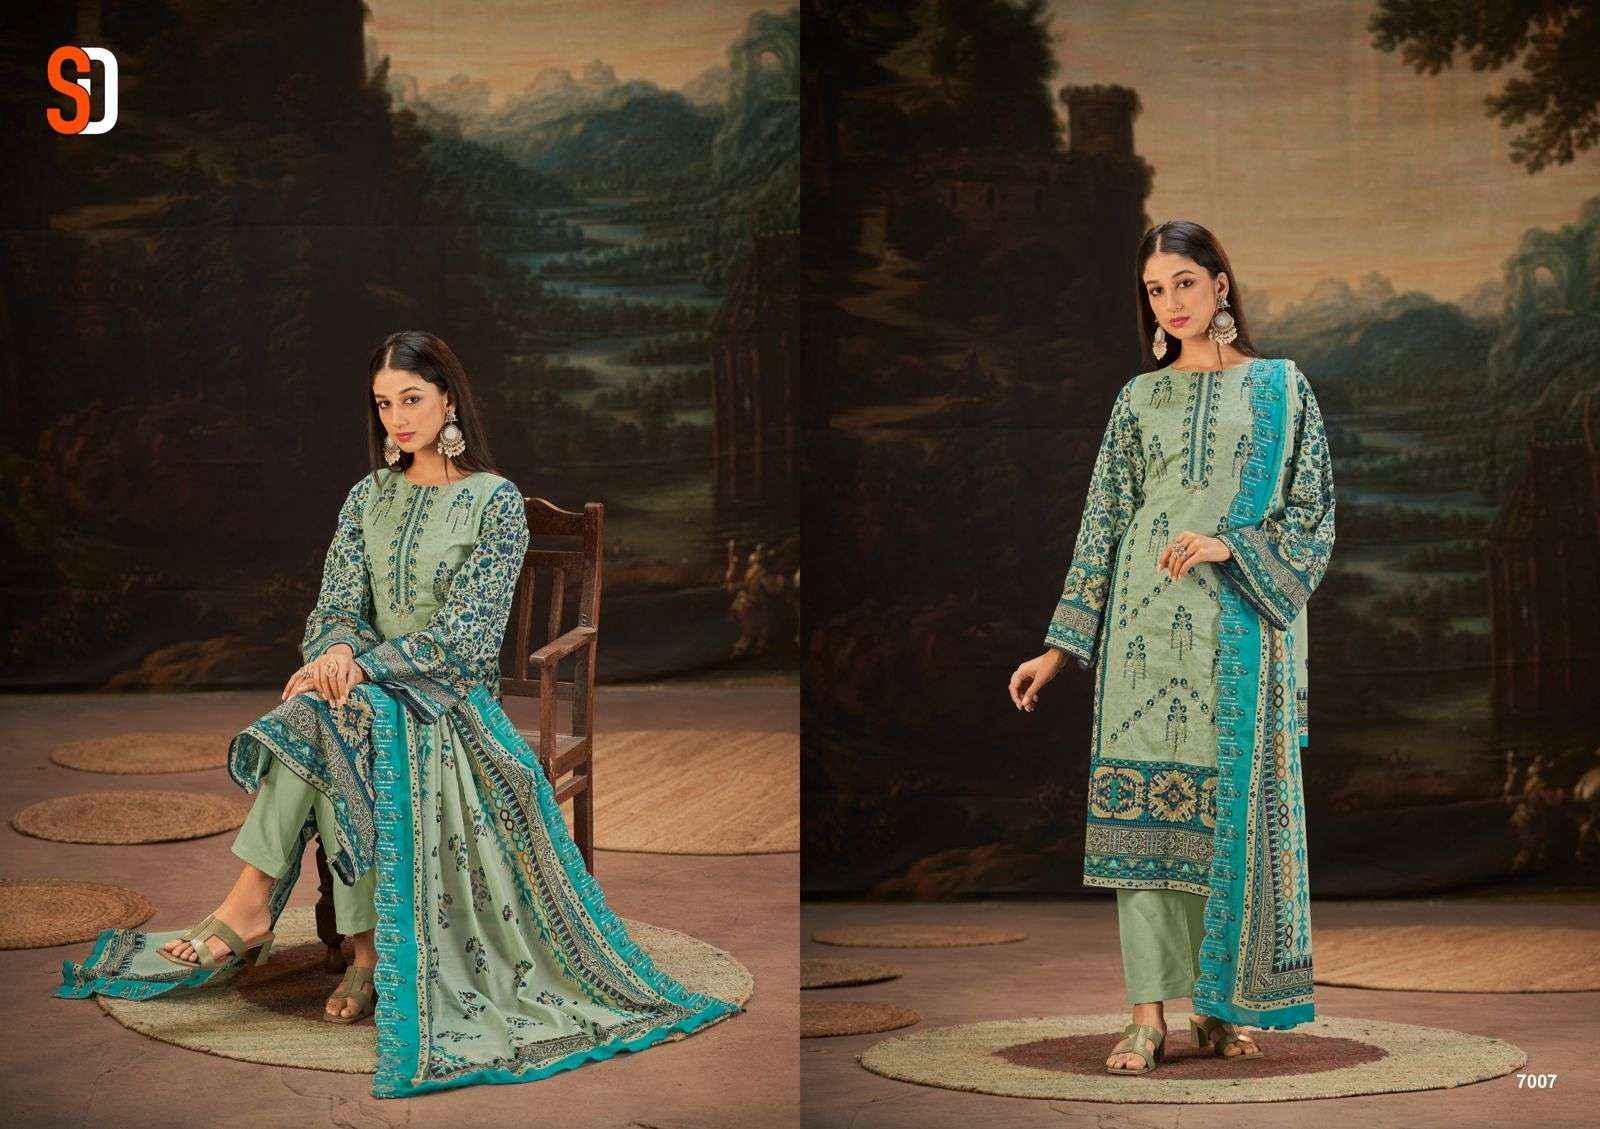 Shraddha Bin Saeed Lawn Collection Vol 7 Designer Suits ( 8 Pcs Catalog )